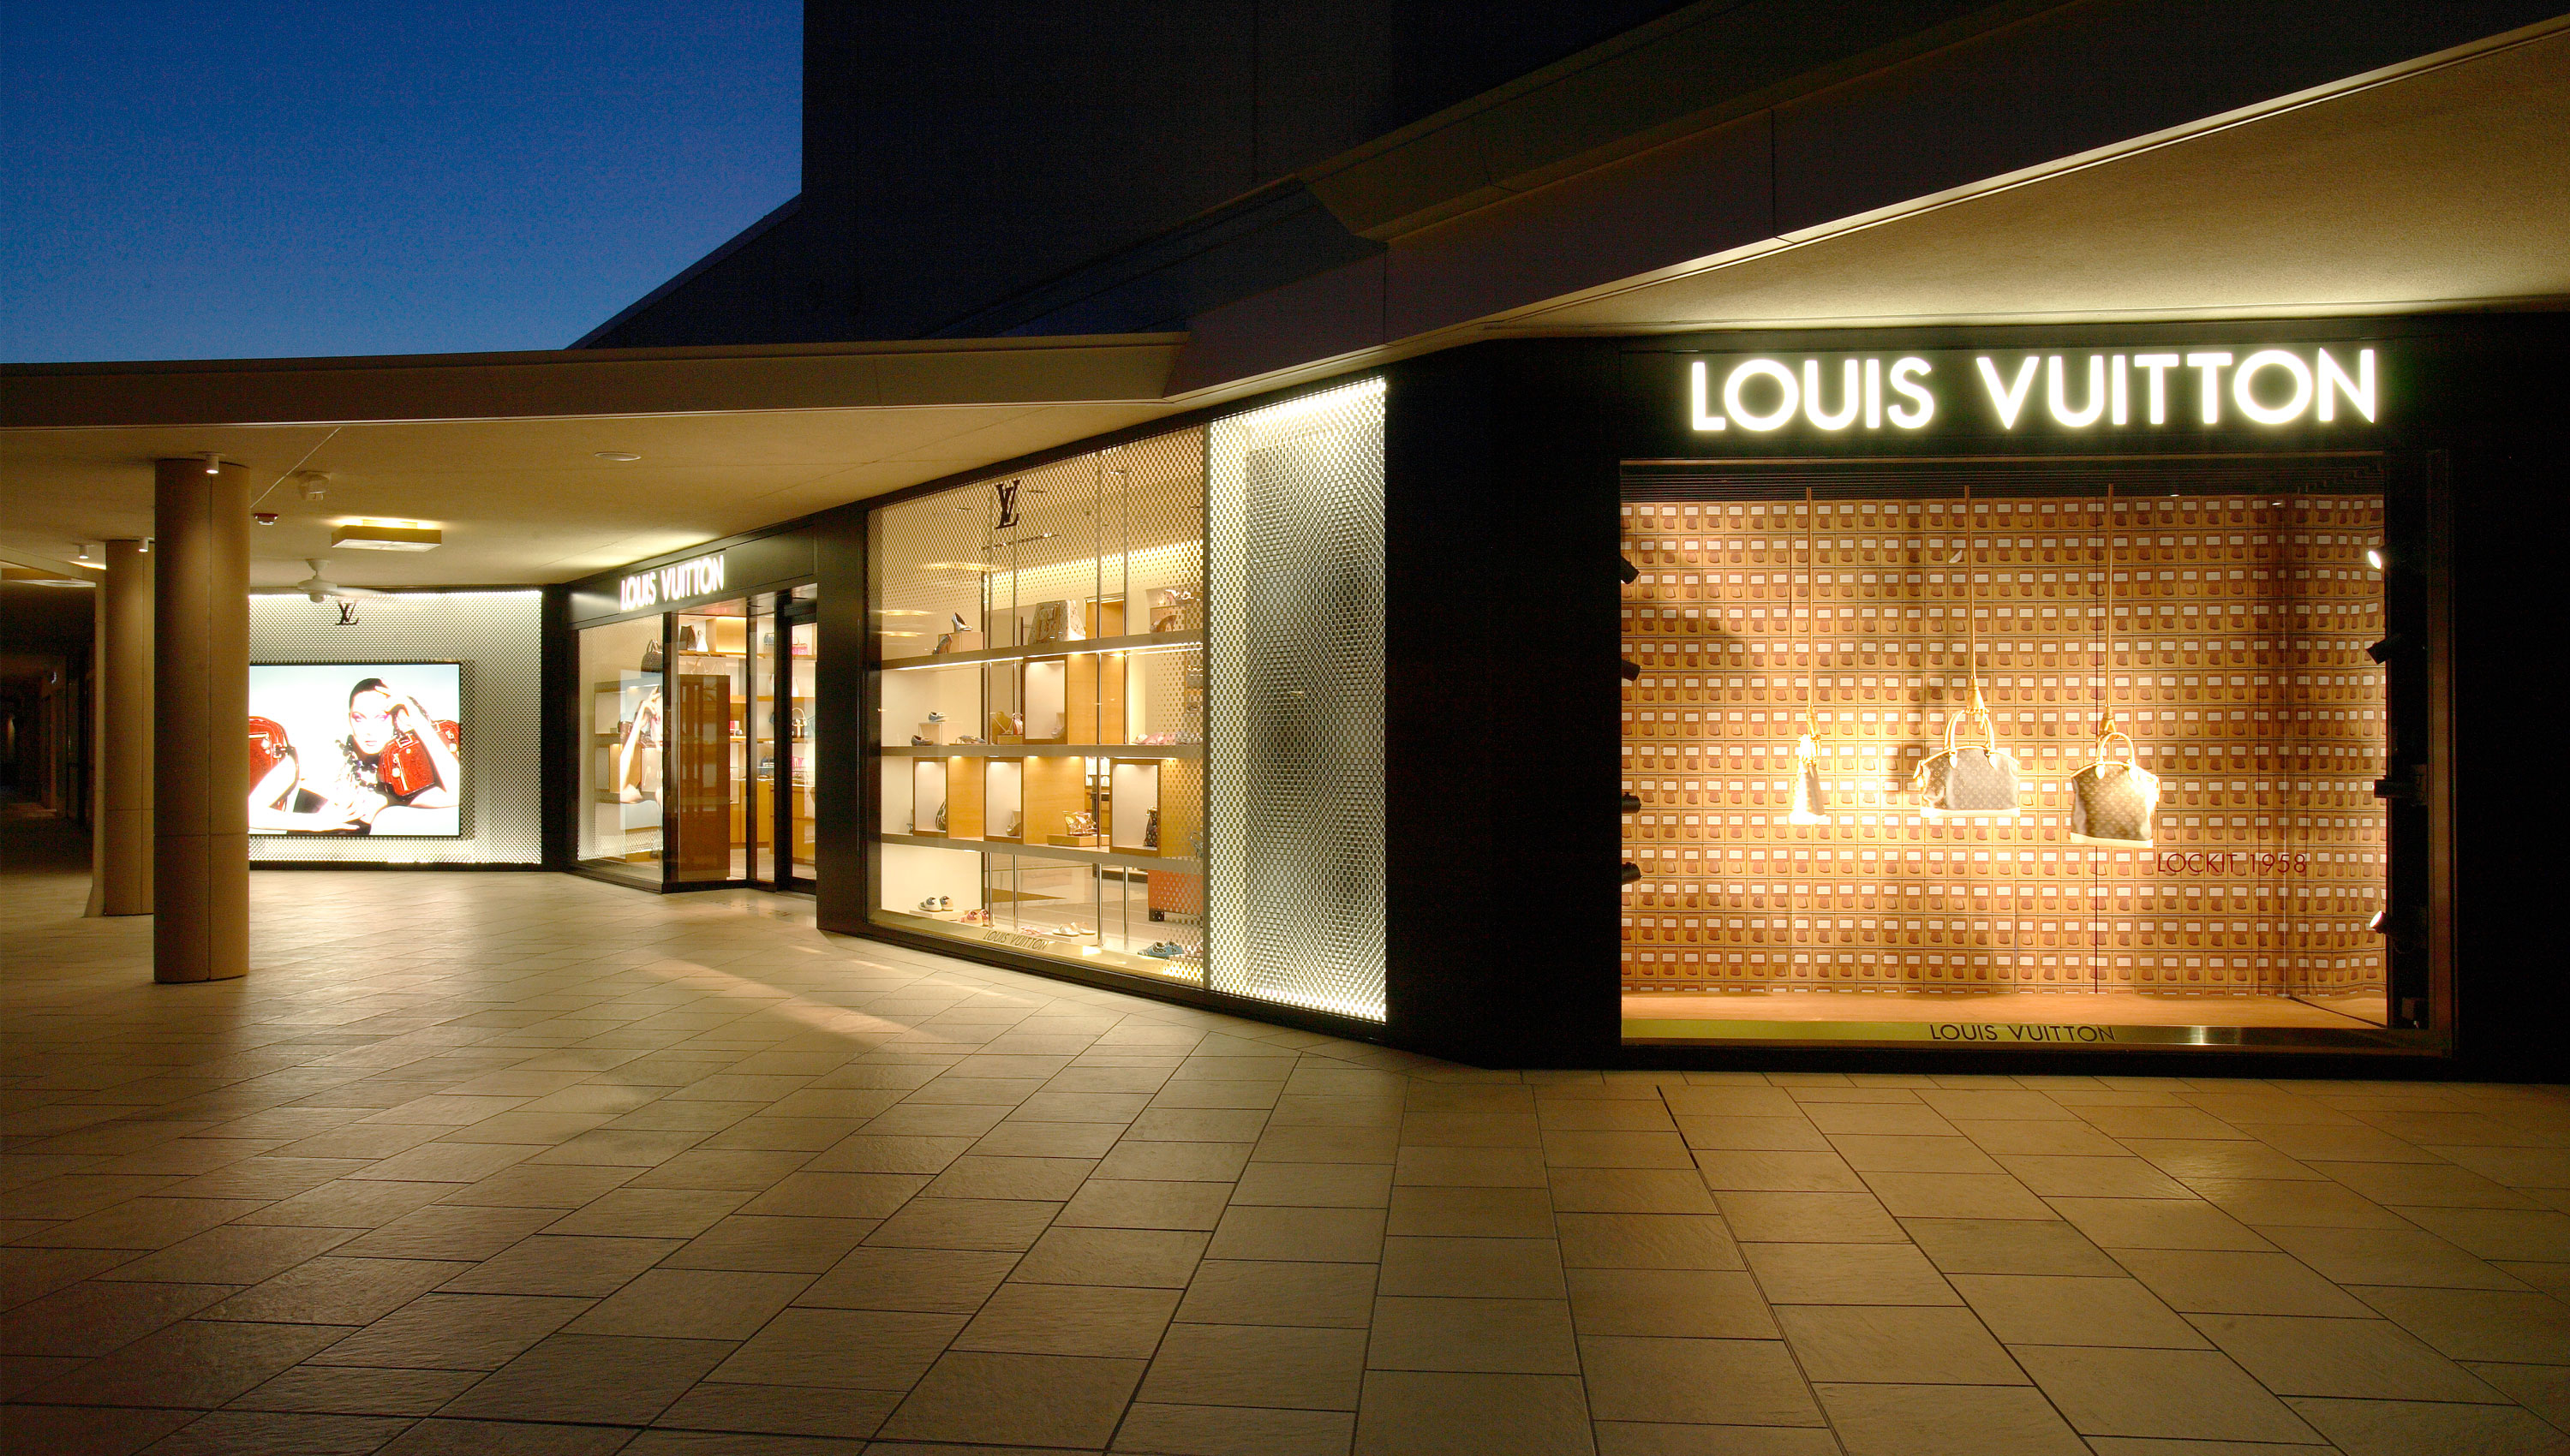 Louis Vuitton Naples Coupons near me in Naples, FL 34108 | 8coupons